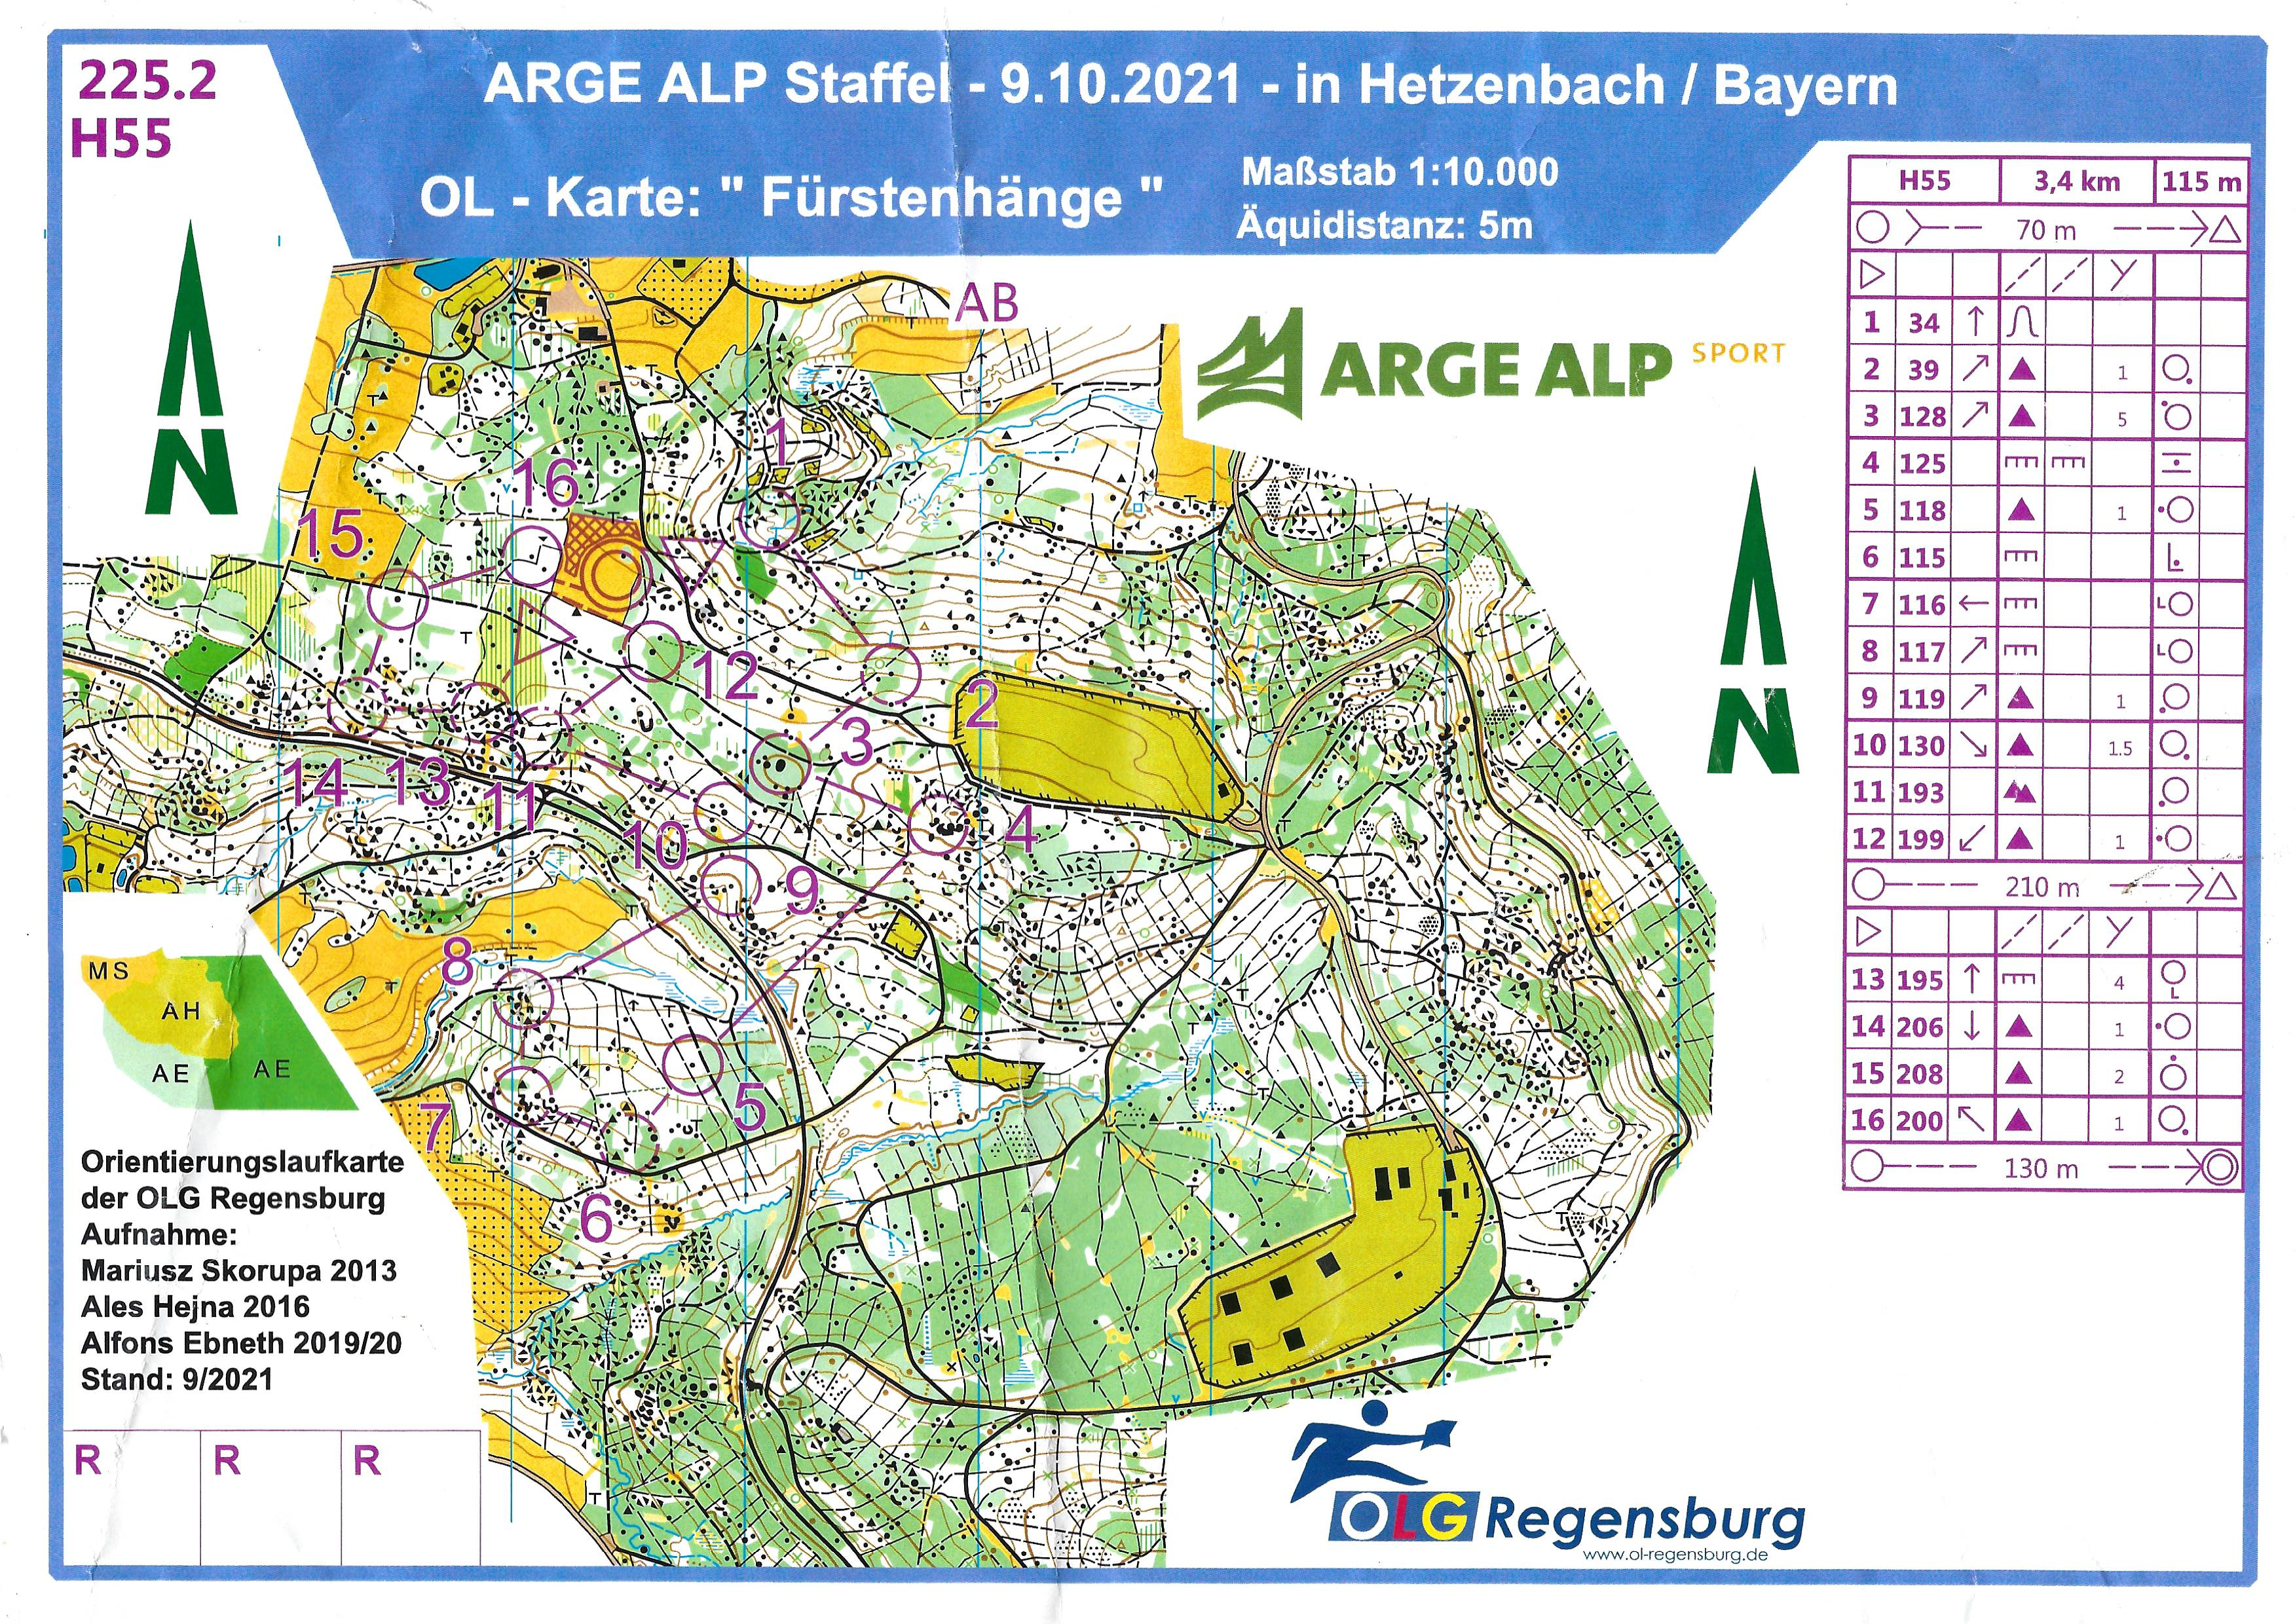 Arge Alp 2021 Regensburg Staffel (09-10-2021)